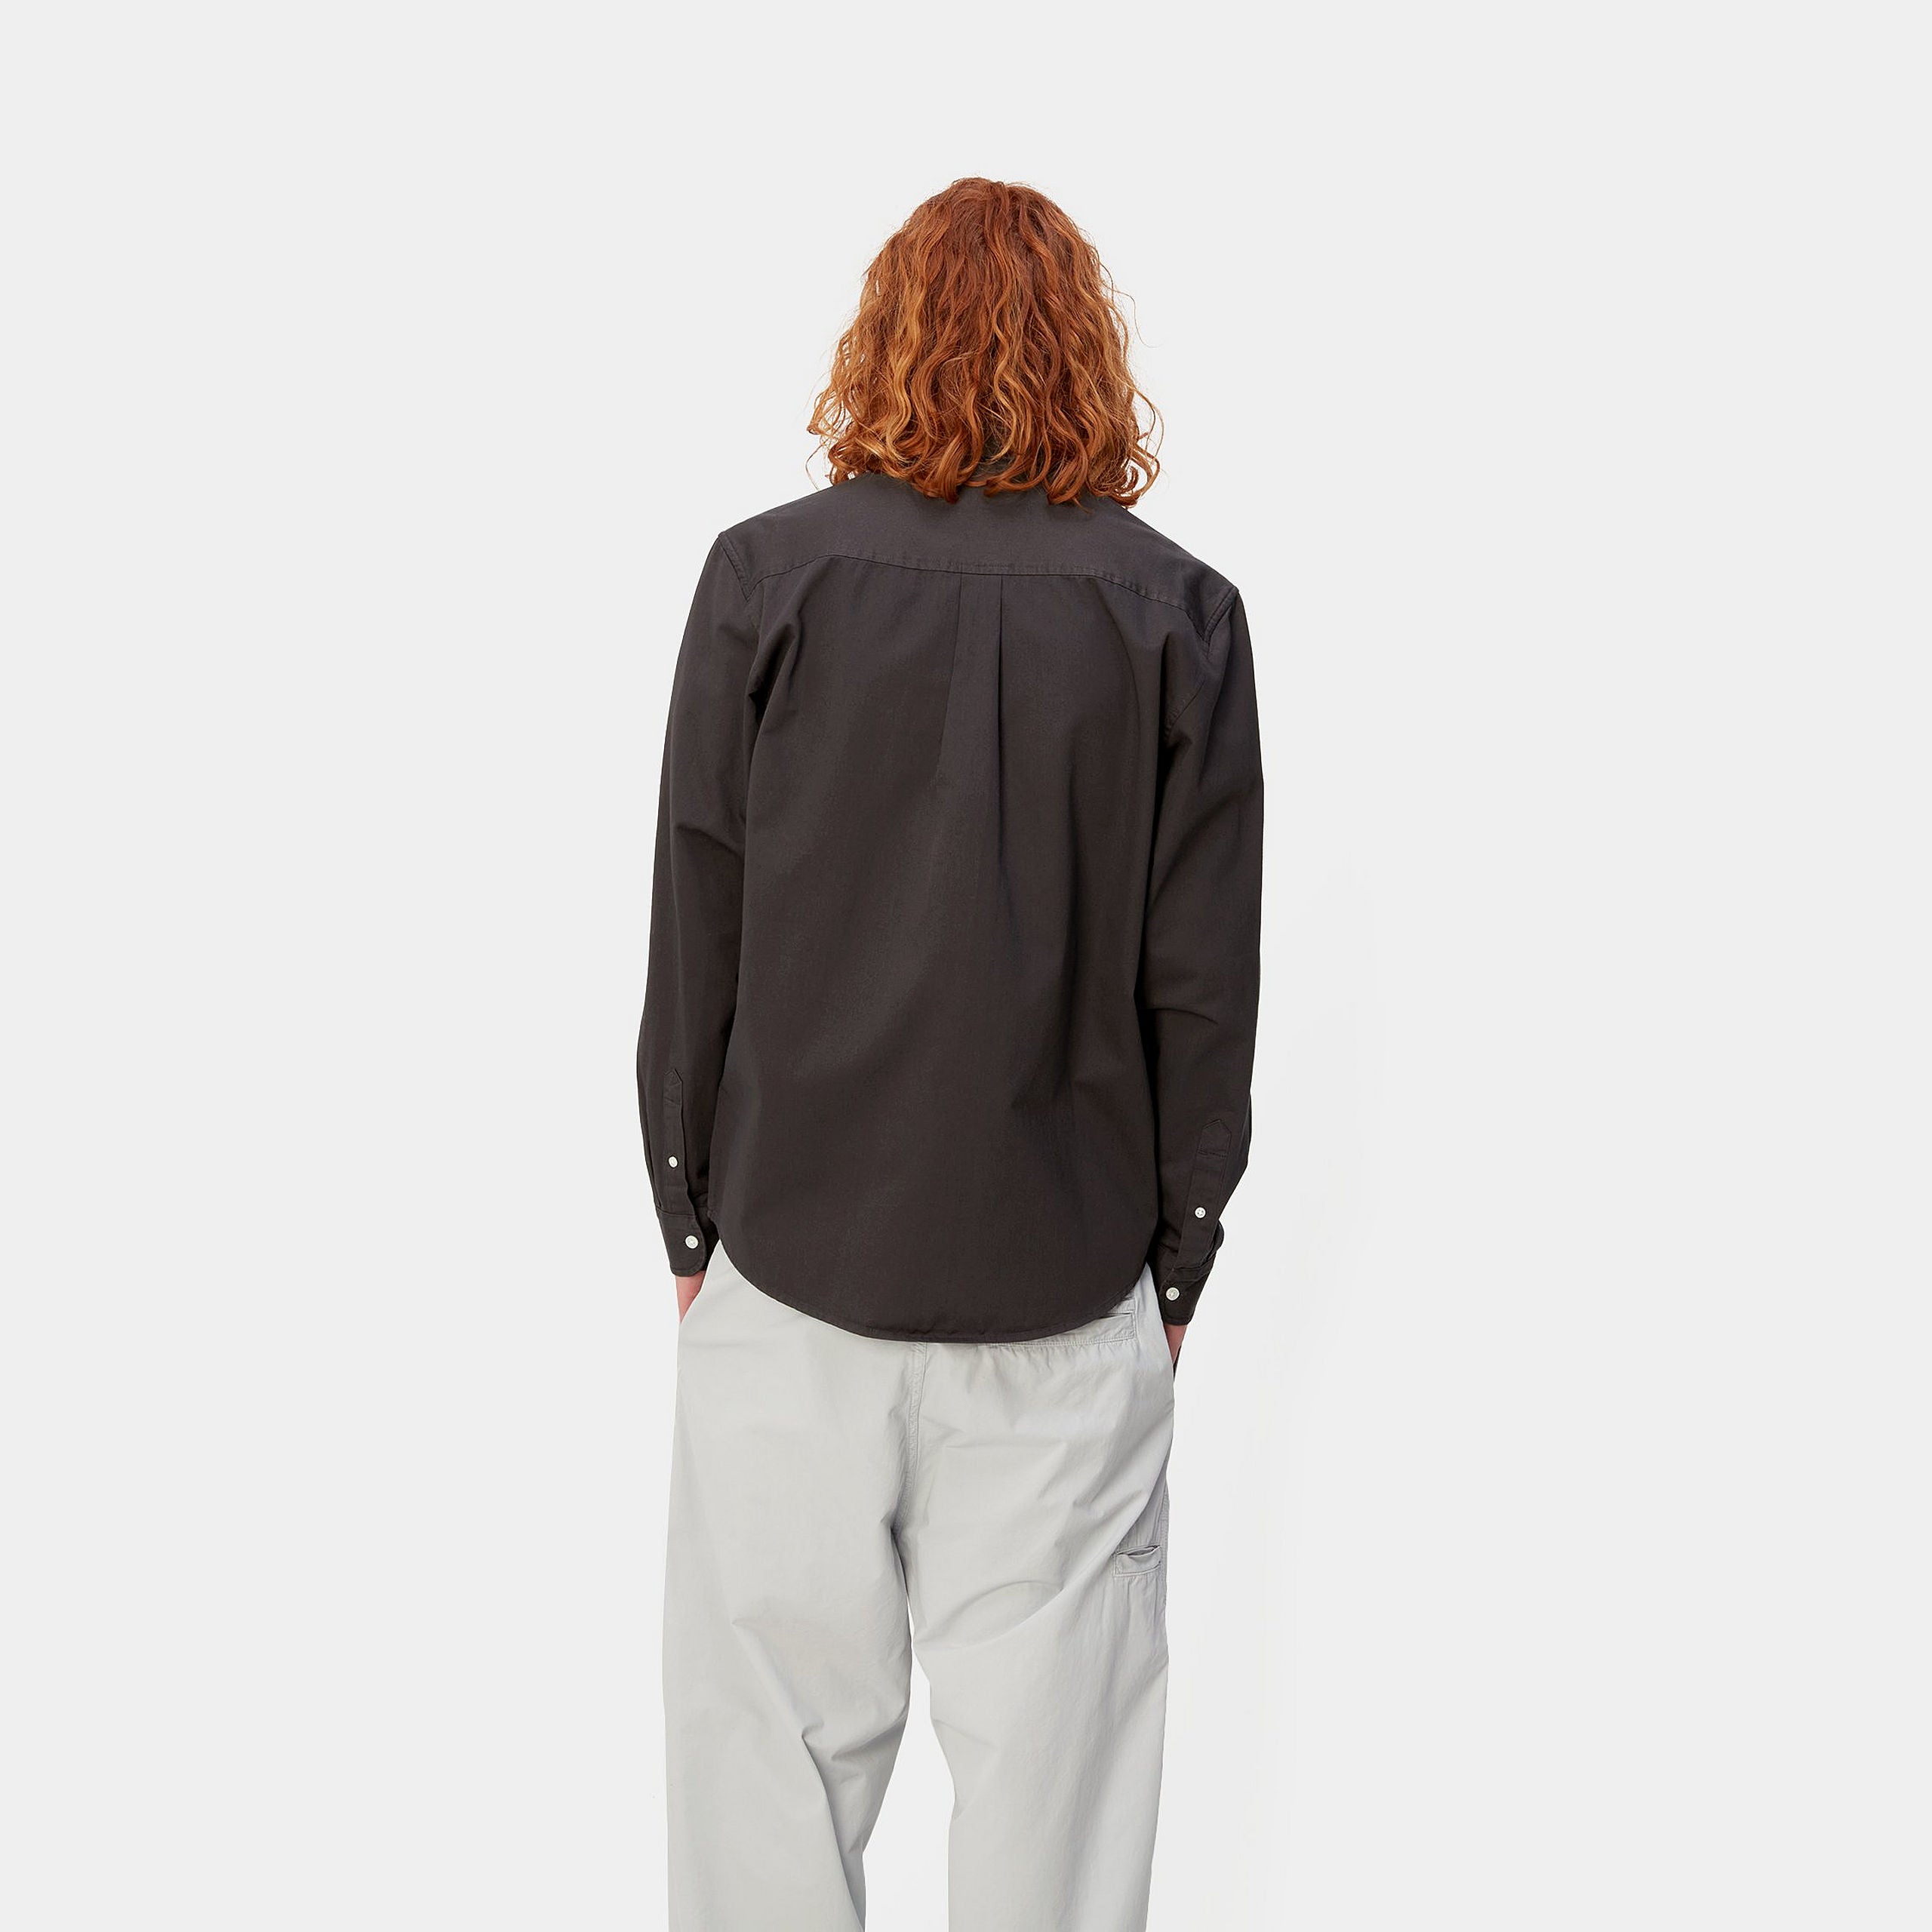 Men's Long Sleeve Madison Shirt-Charcoal / White-Model Back View